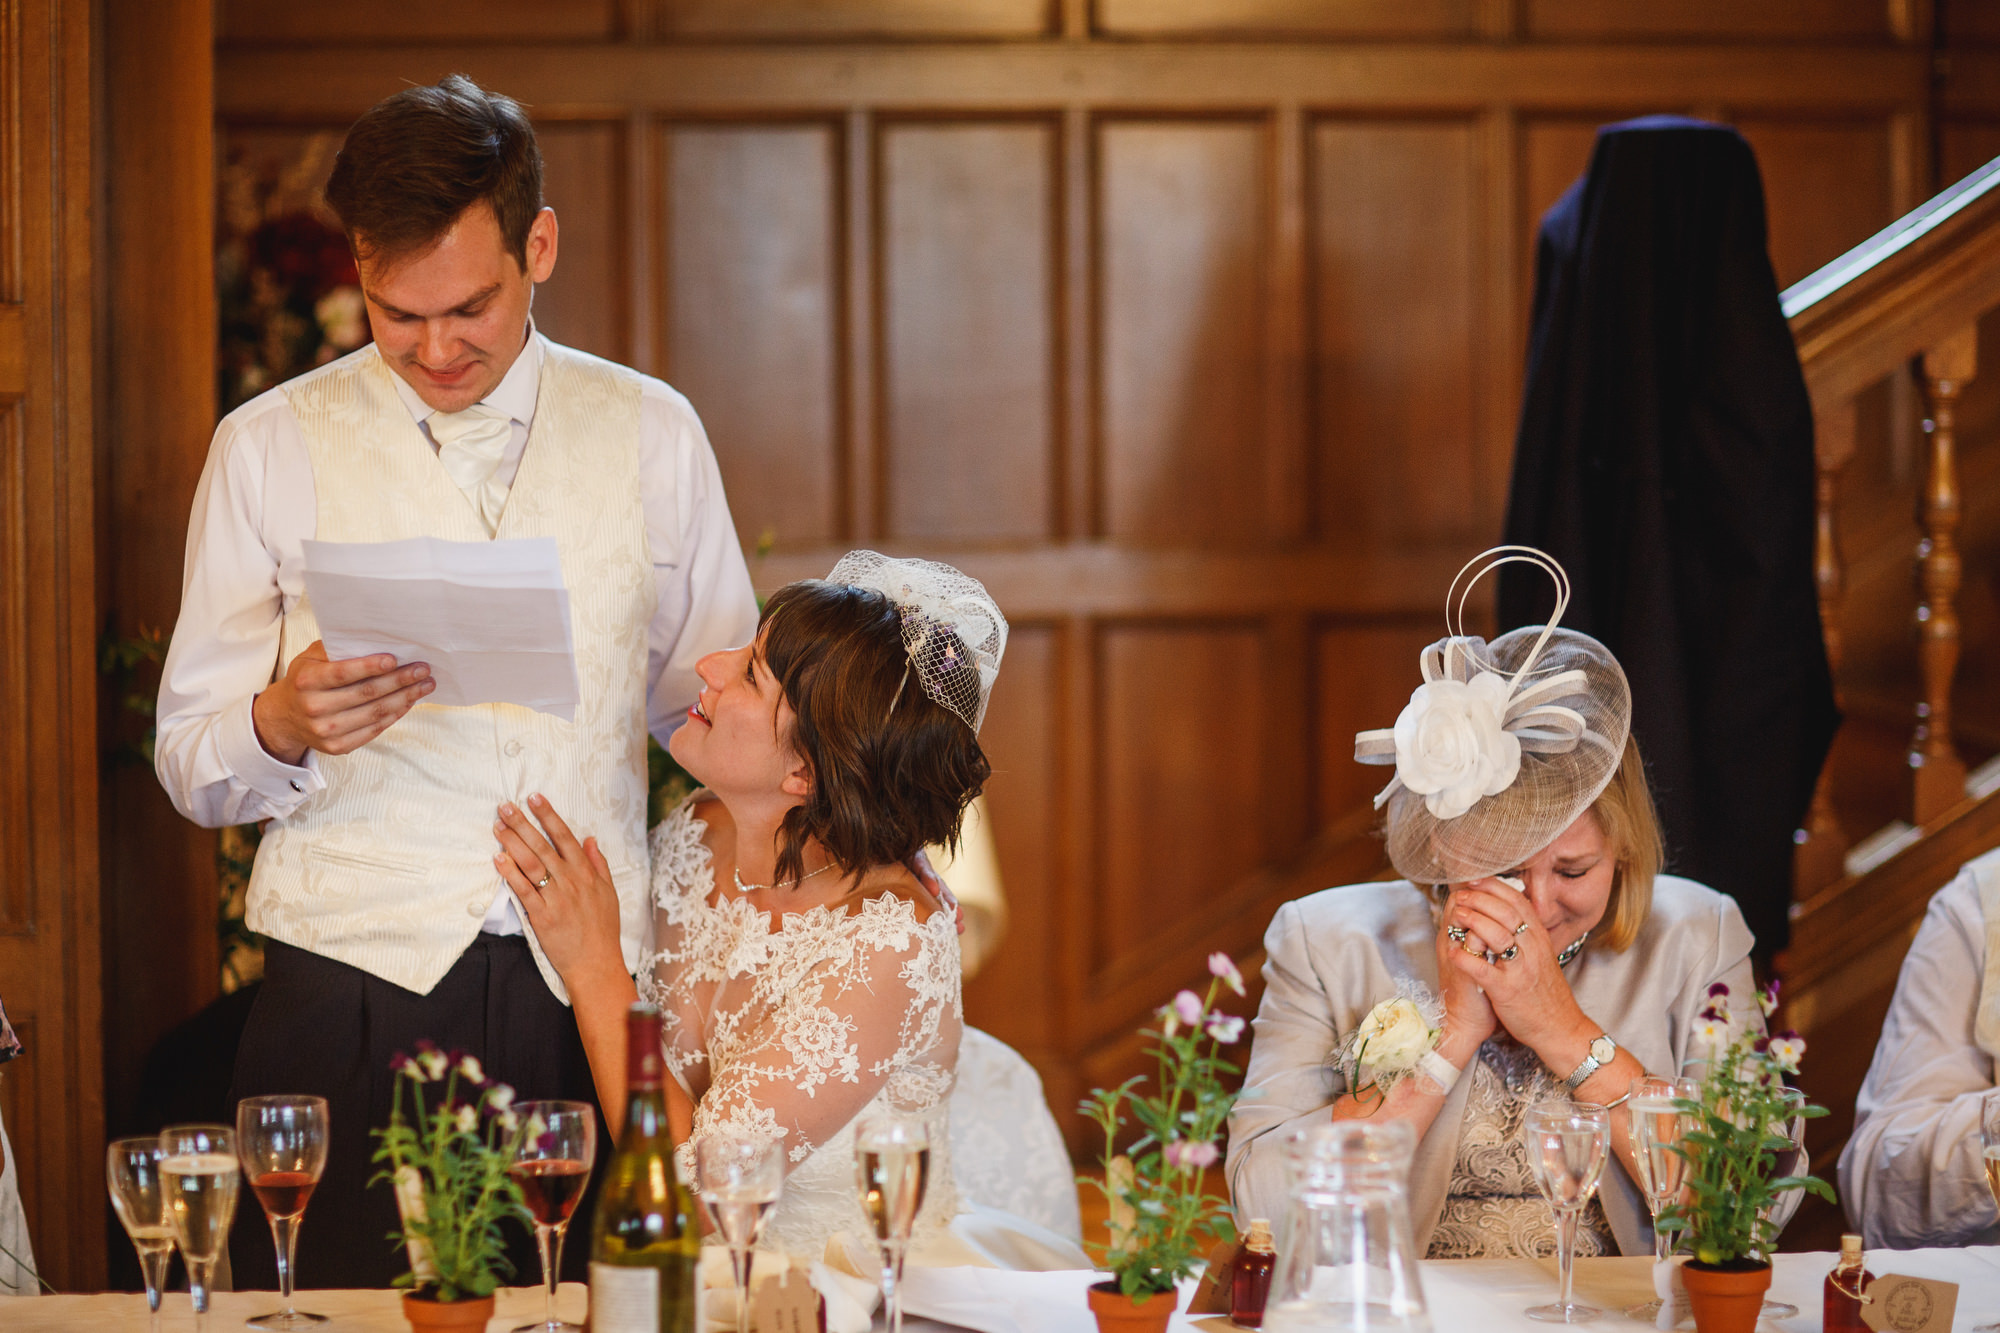 Best cheshire wedding photography 2014